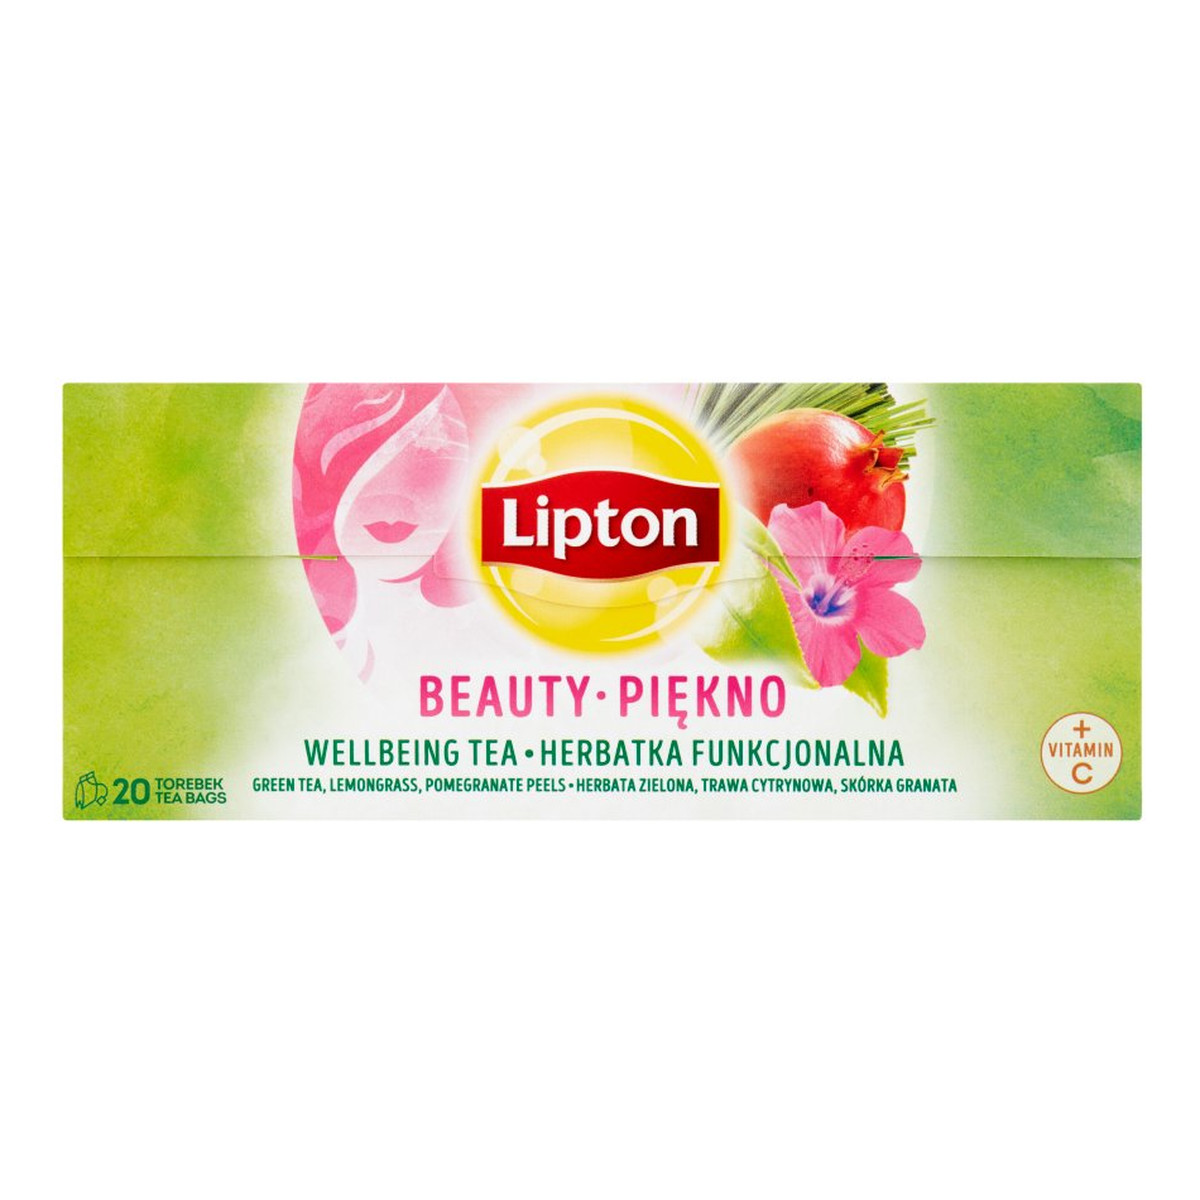 Lipton Piękno Herbata funkcjonalna z witaminą C 20 torebek 32g